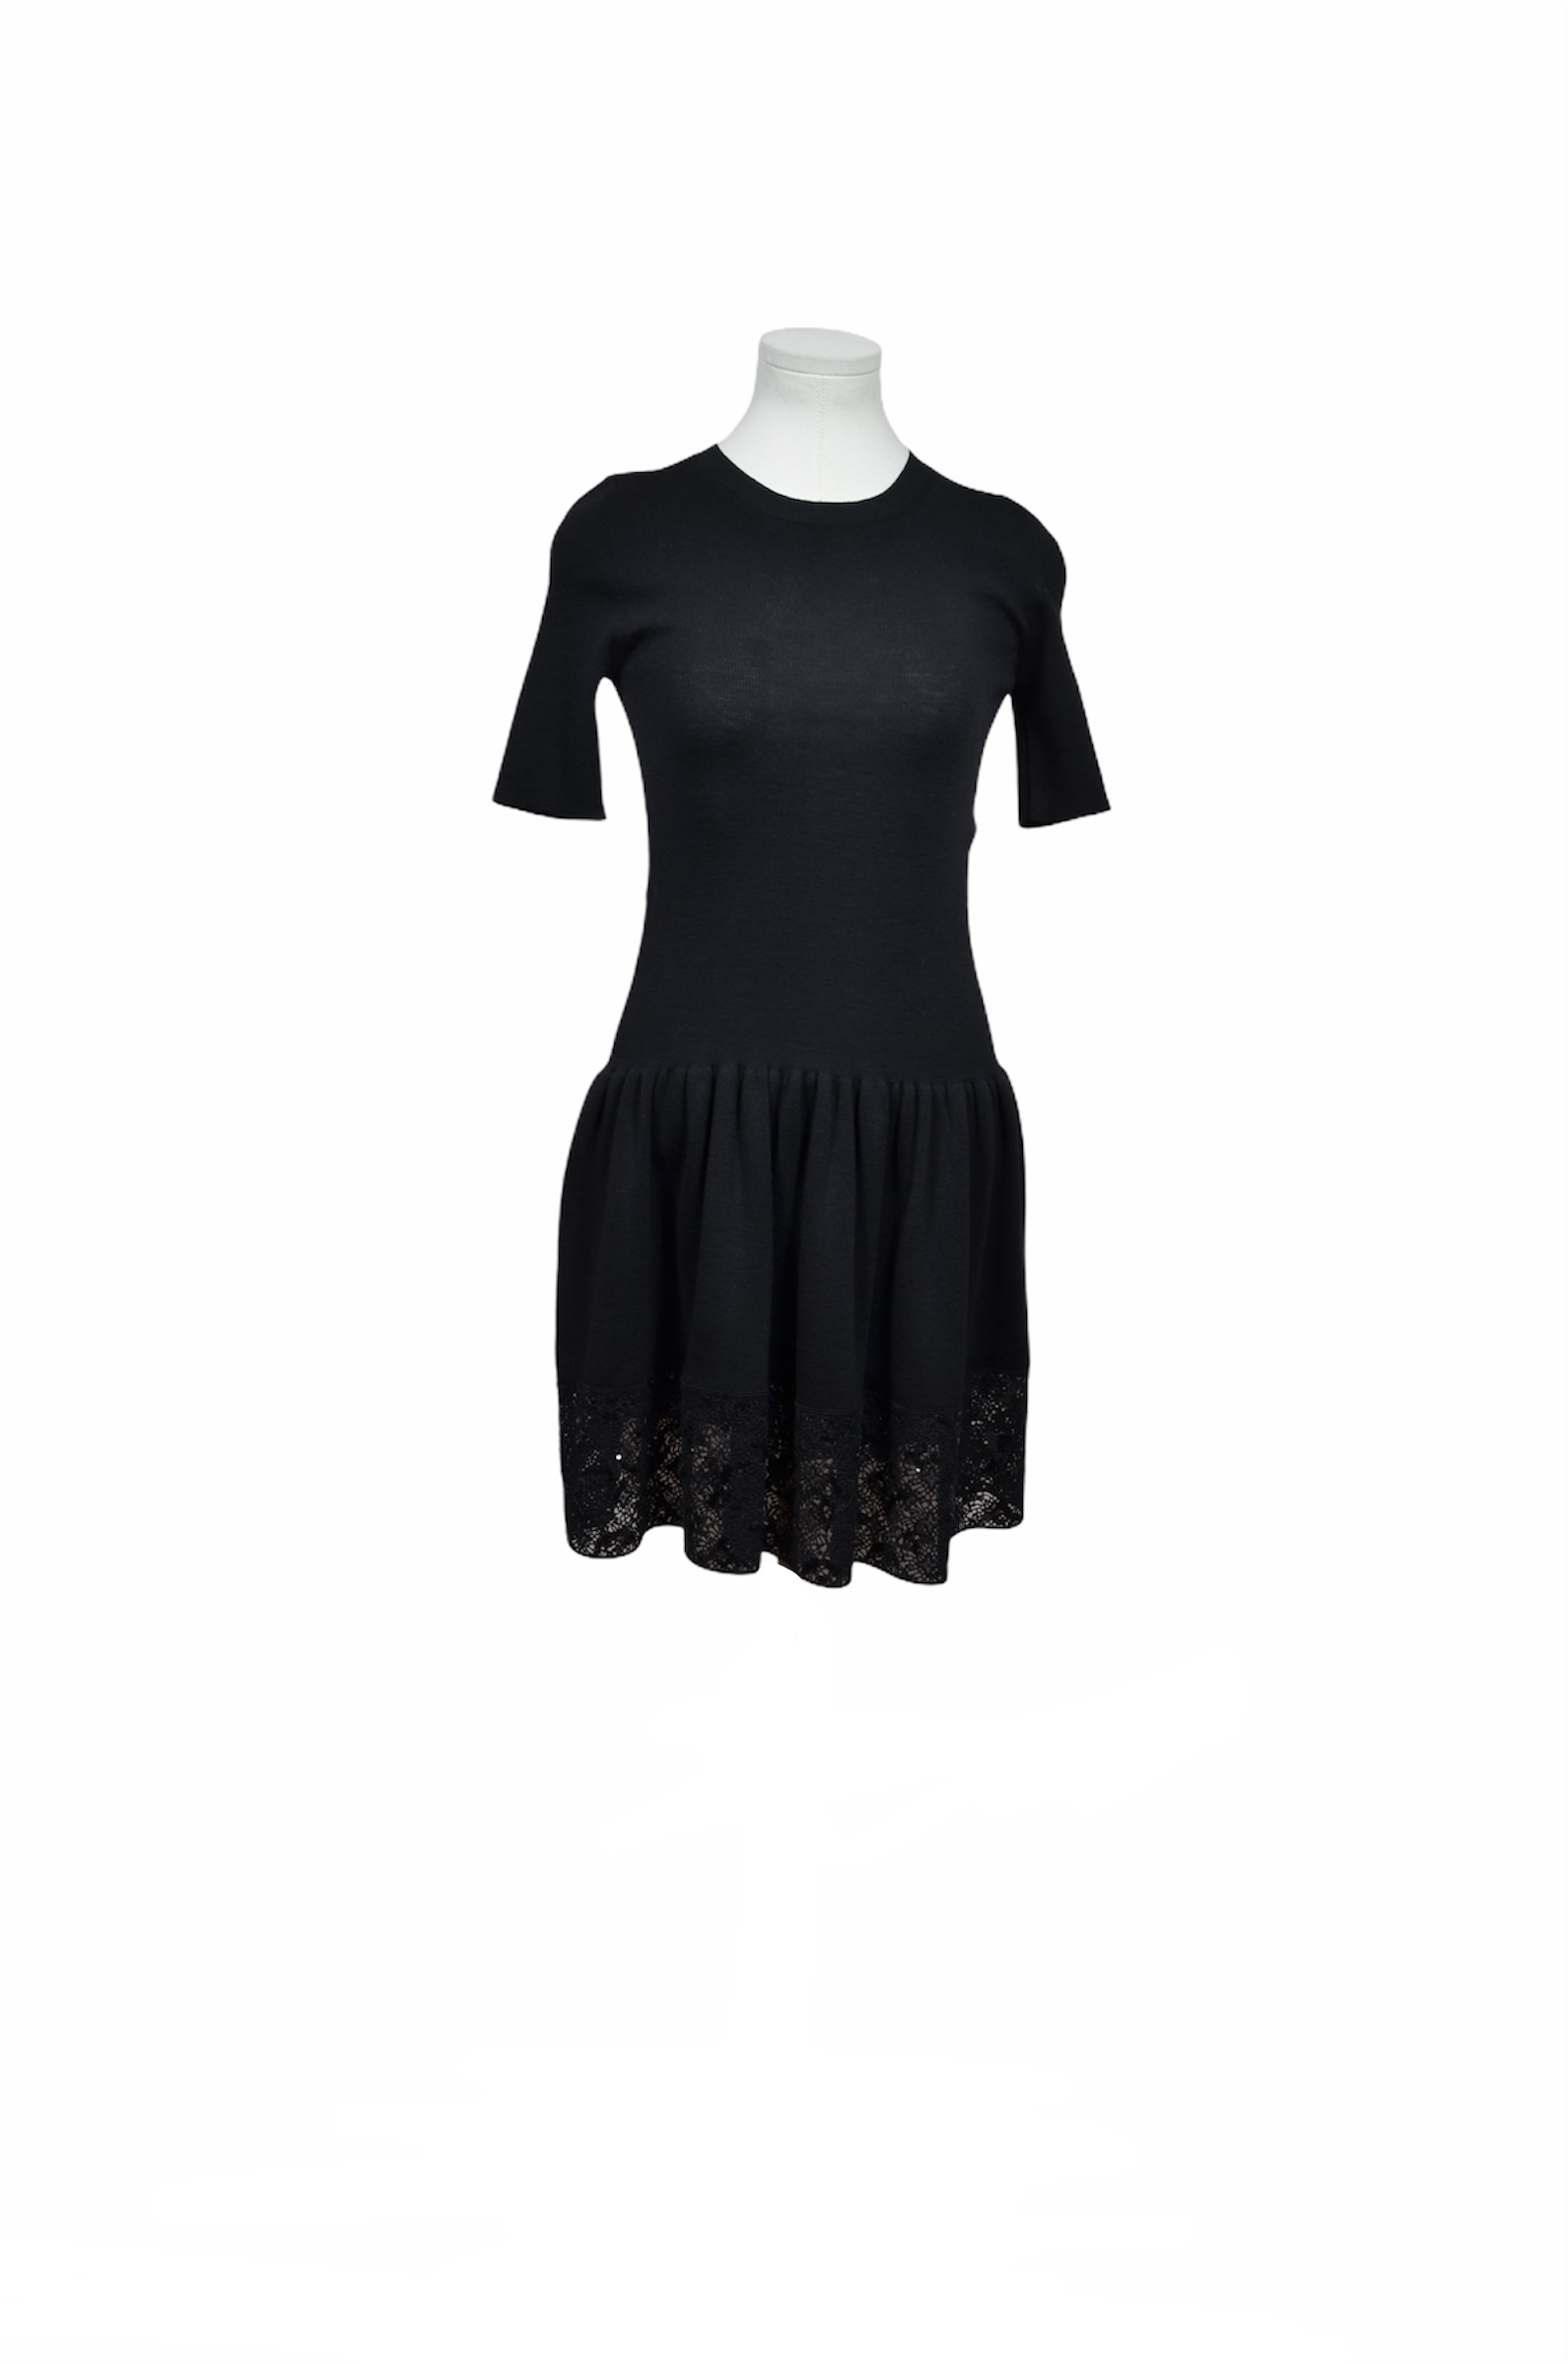 Louis Vuitton Kleid schwarz Gr. S Wolle Dress black Wool Pailletten